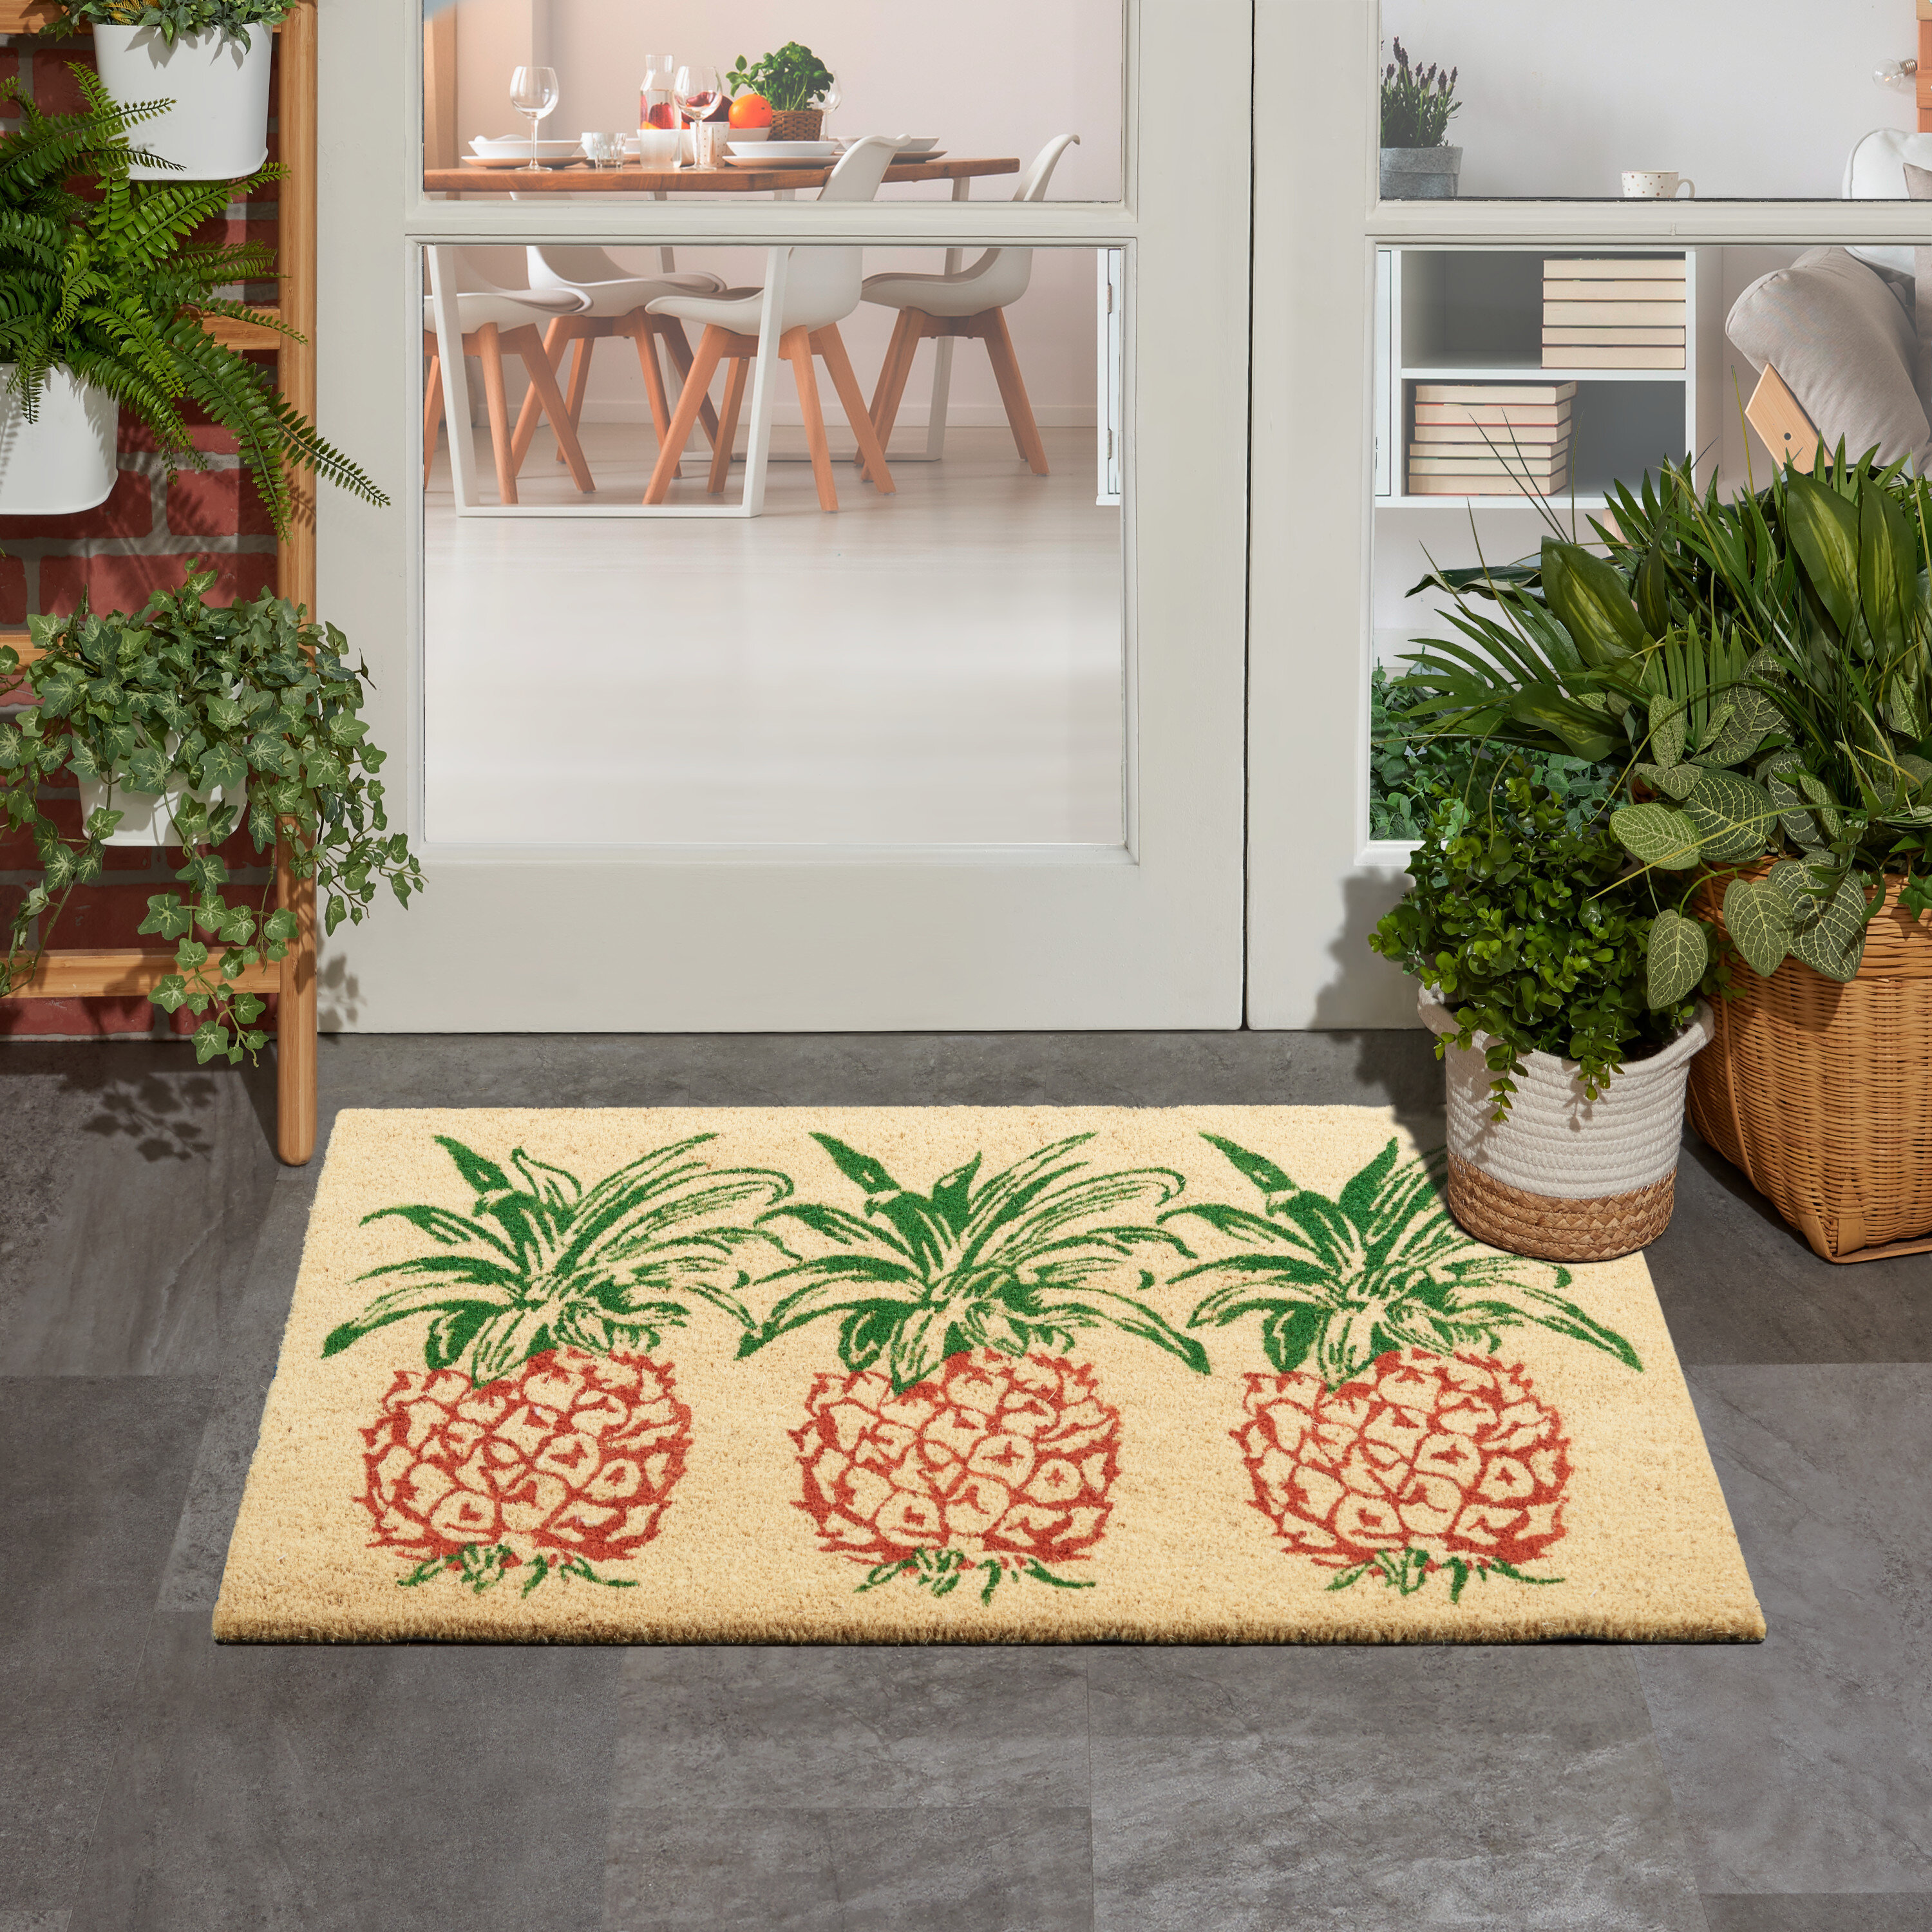 Welcome Mat DoorMat  Housewarming Gift Aloha Beaches Pineapple 